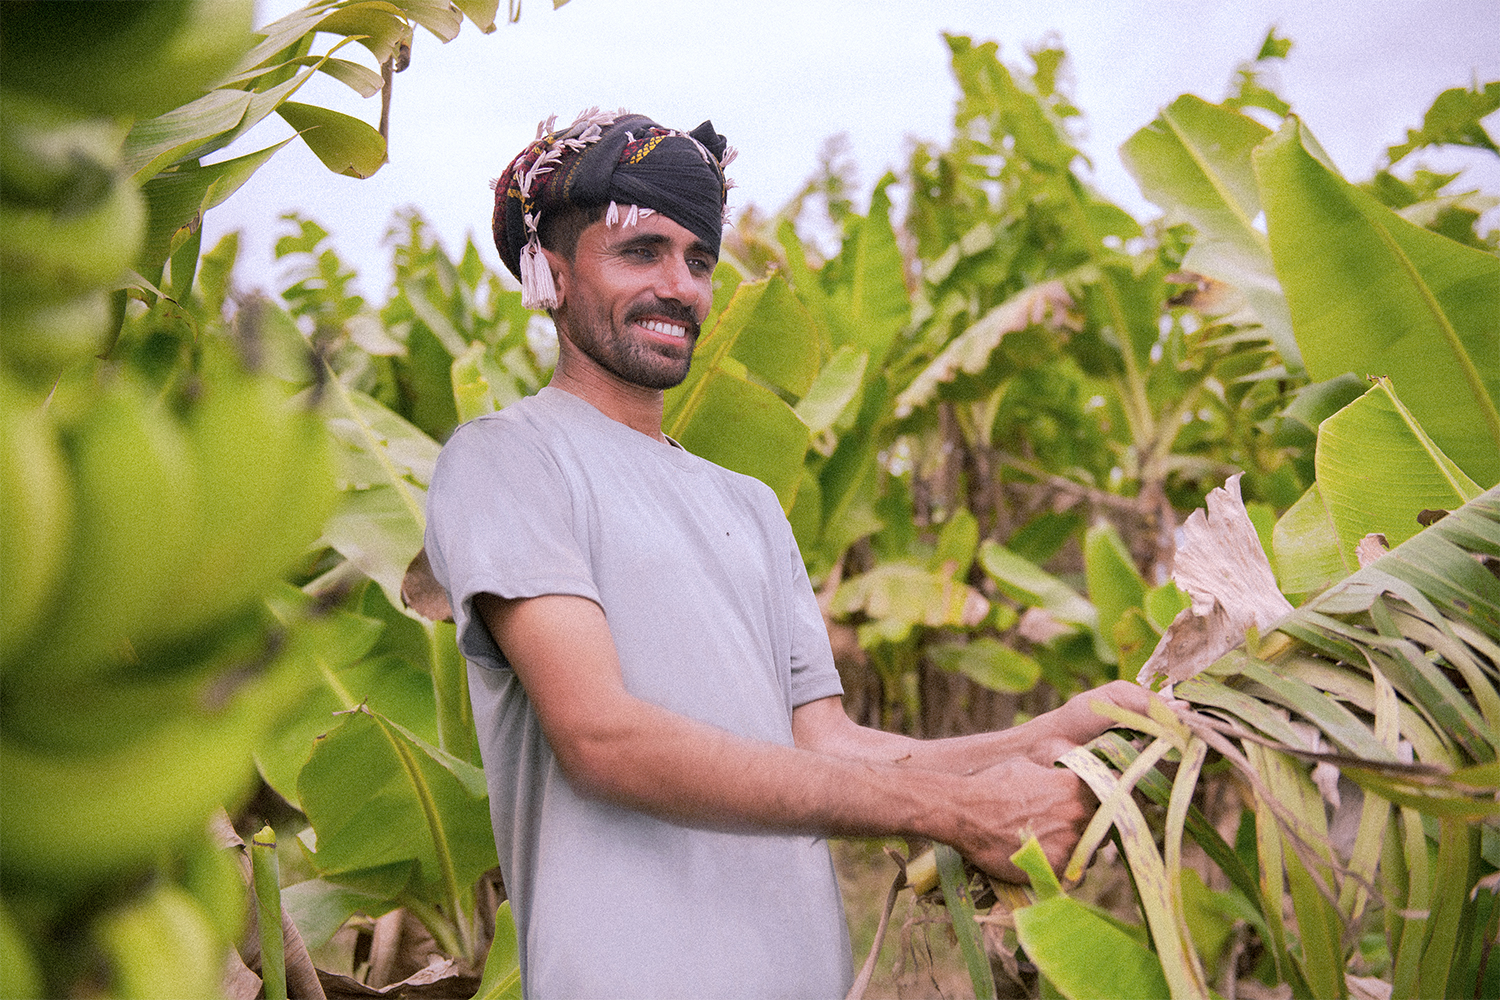 The creation of Loomshake yarn begins at banana farms in Sindh, Pakistan